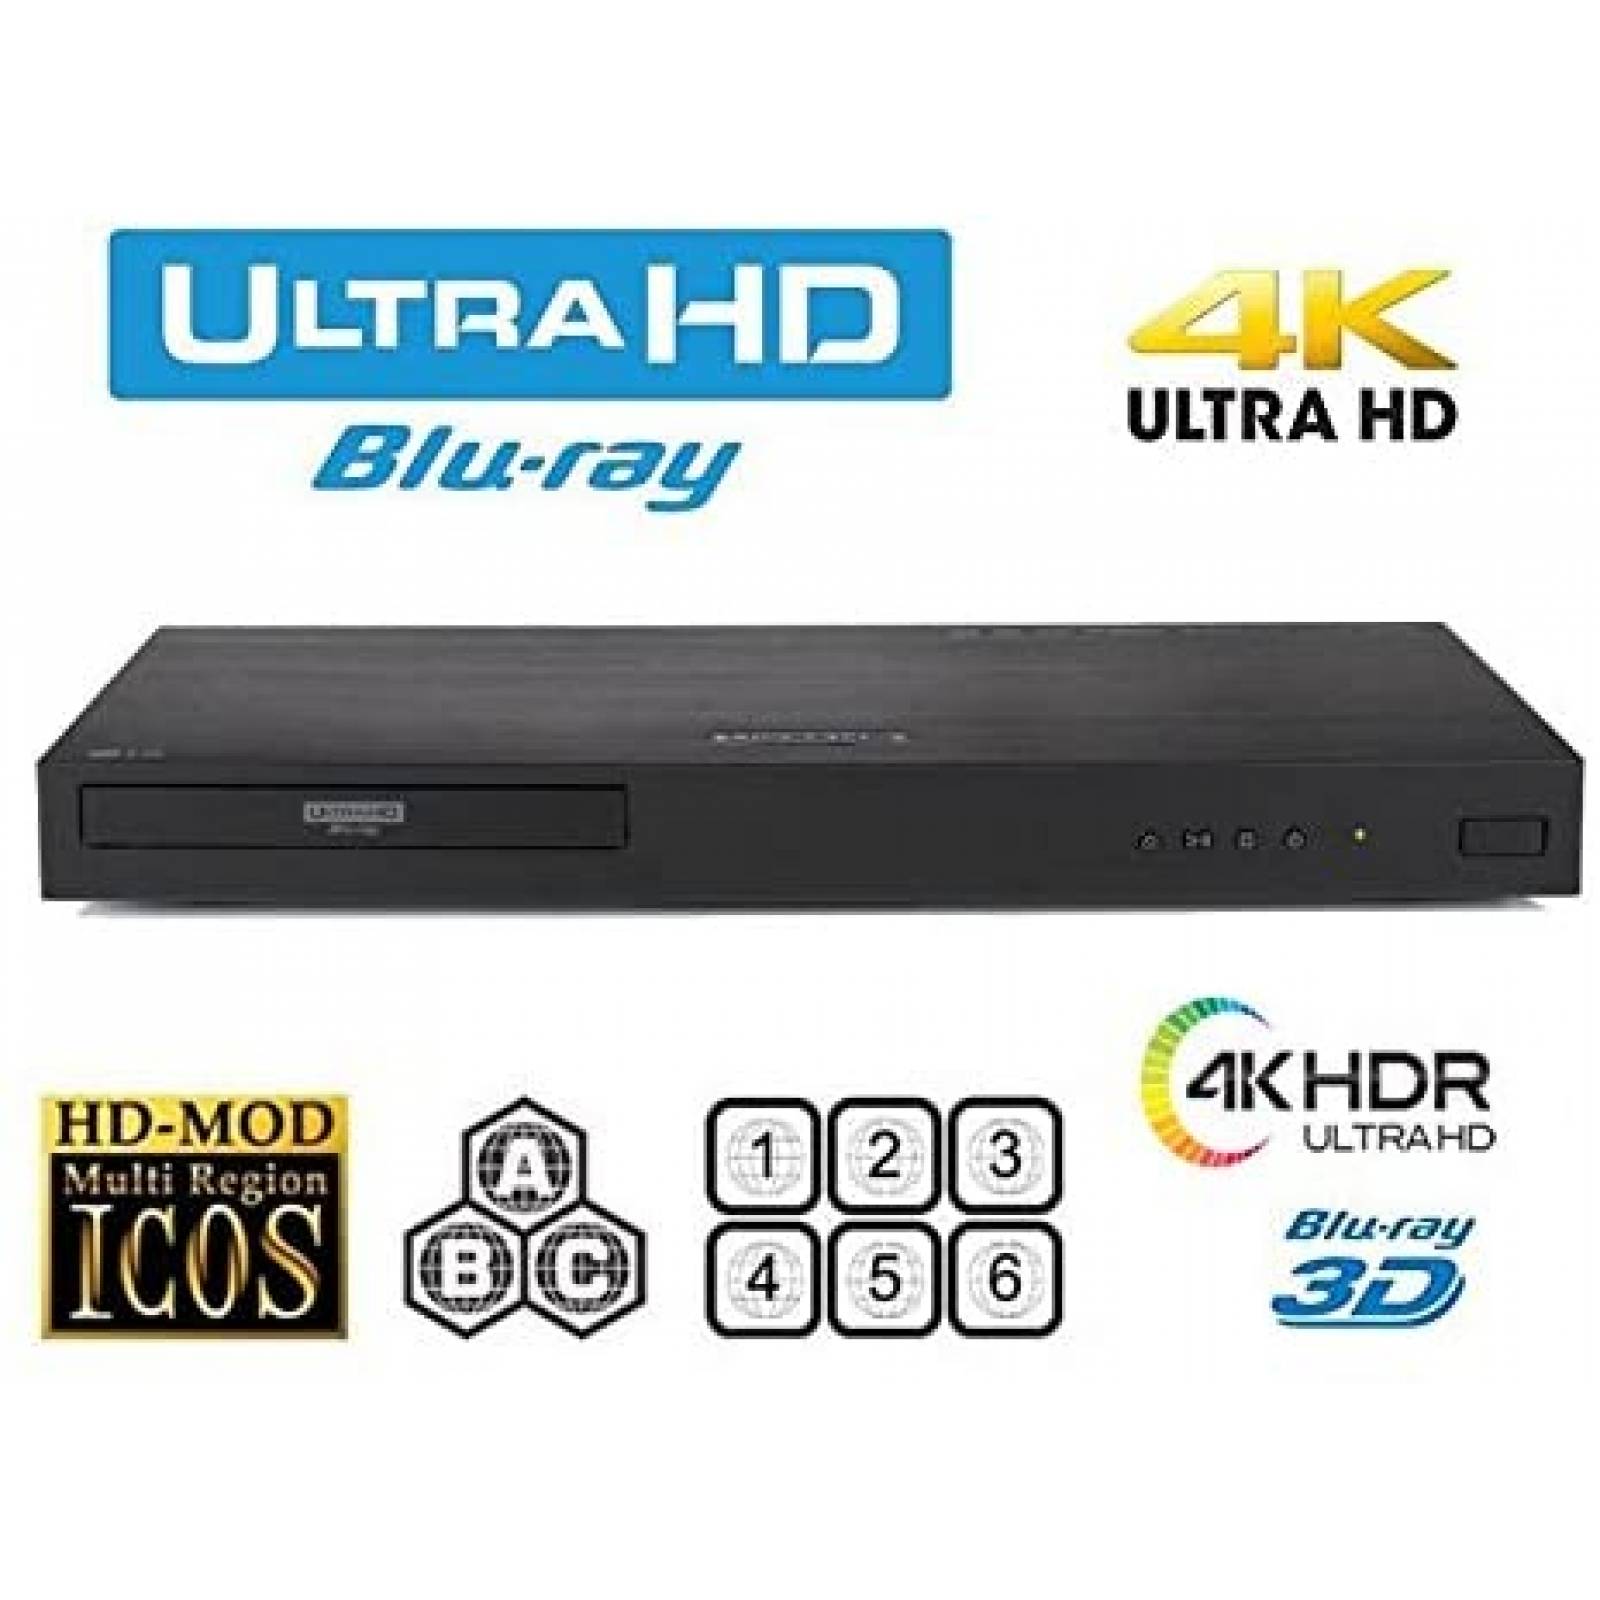 Reproductor de Blu-Ray HDI 4K UHD DVD USB 100-240V -Negro